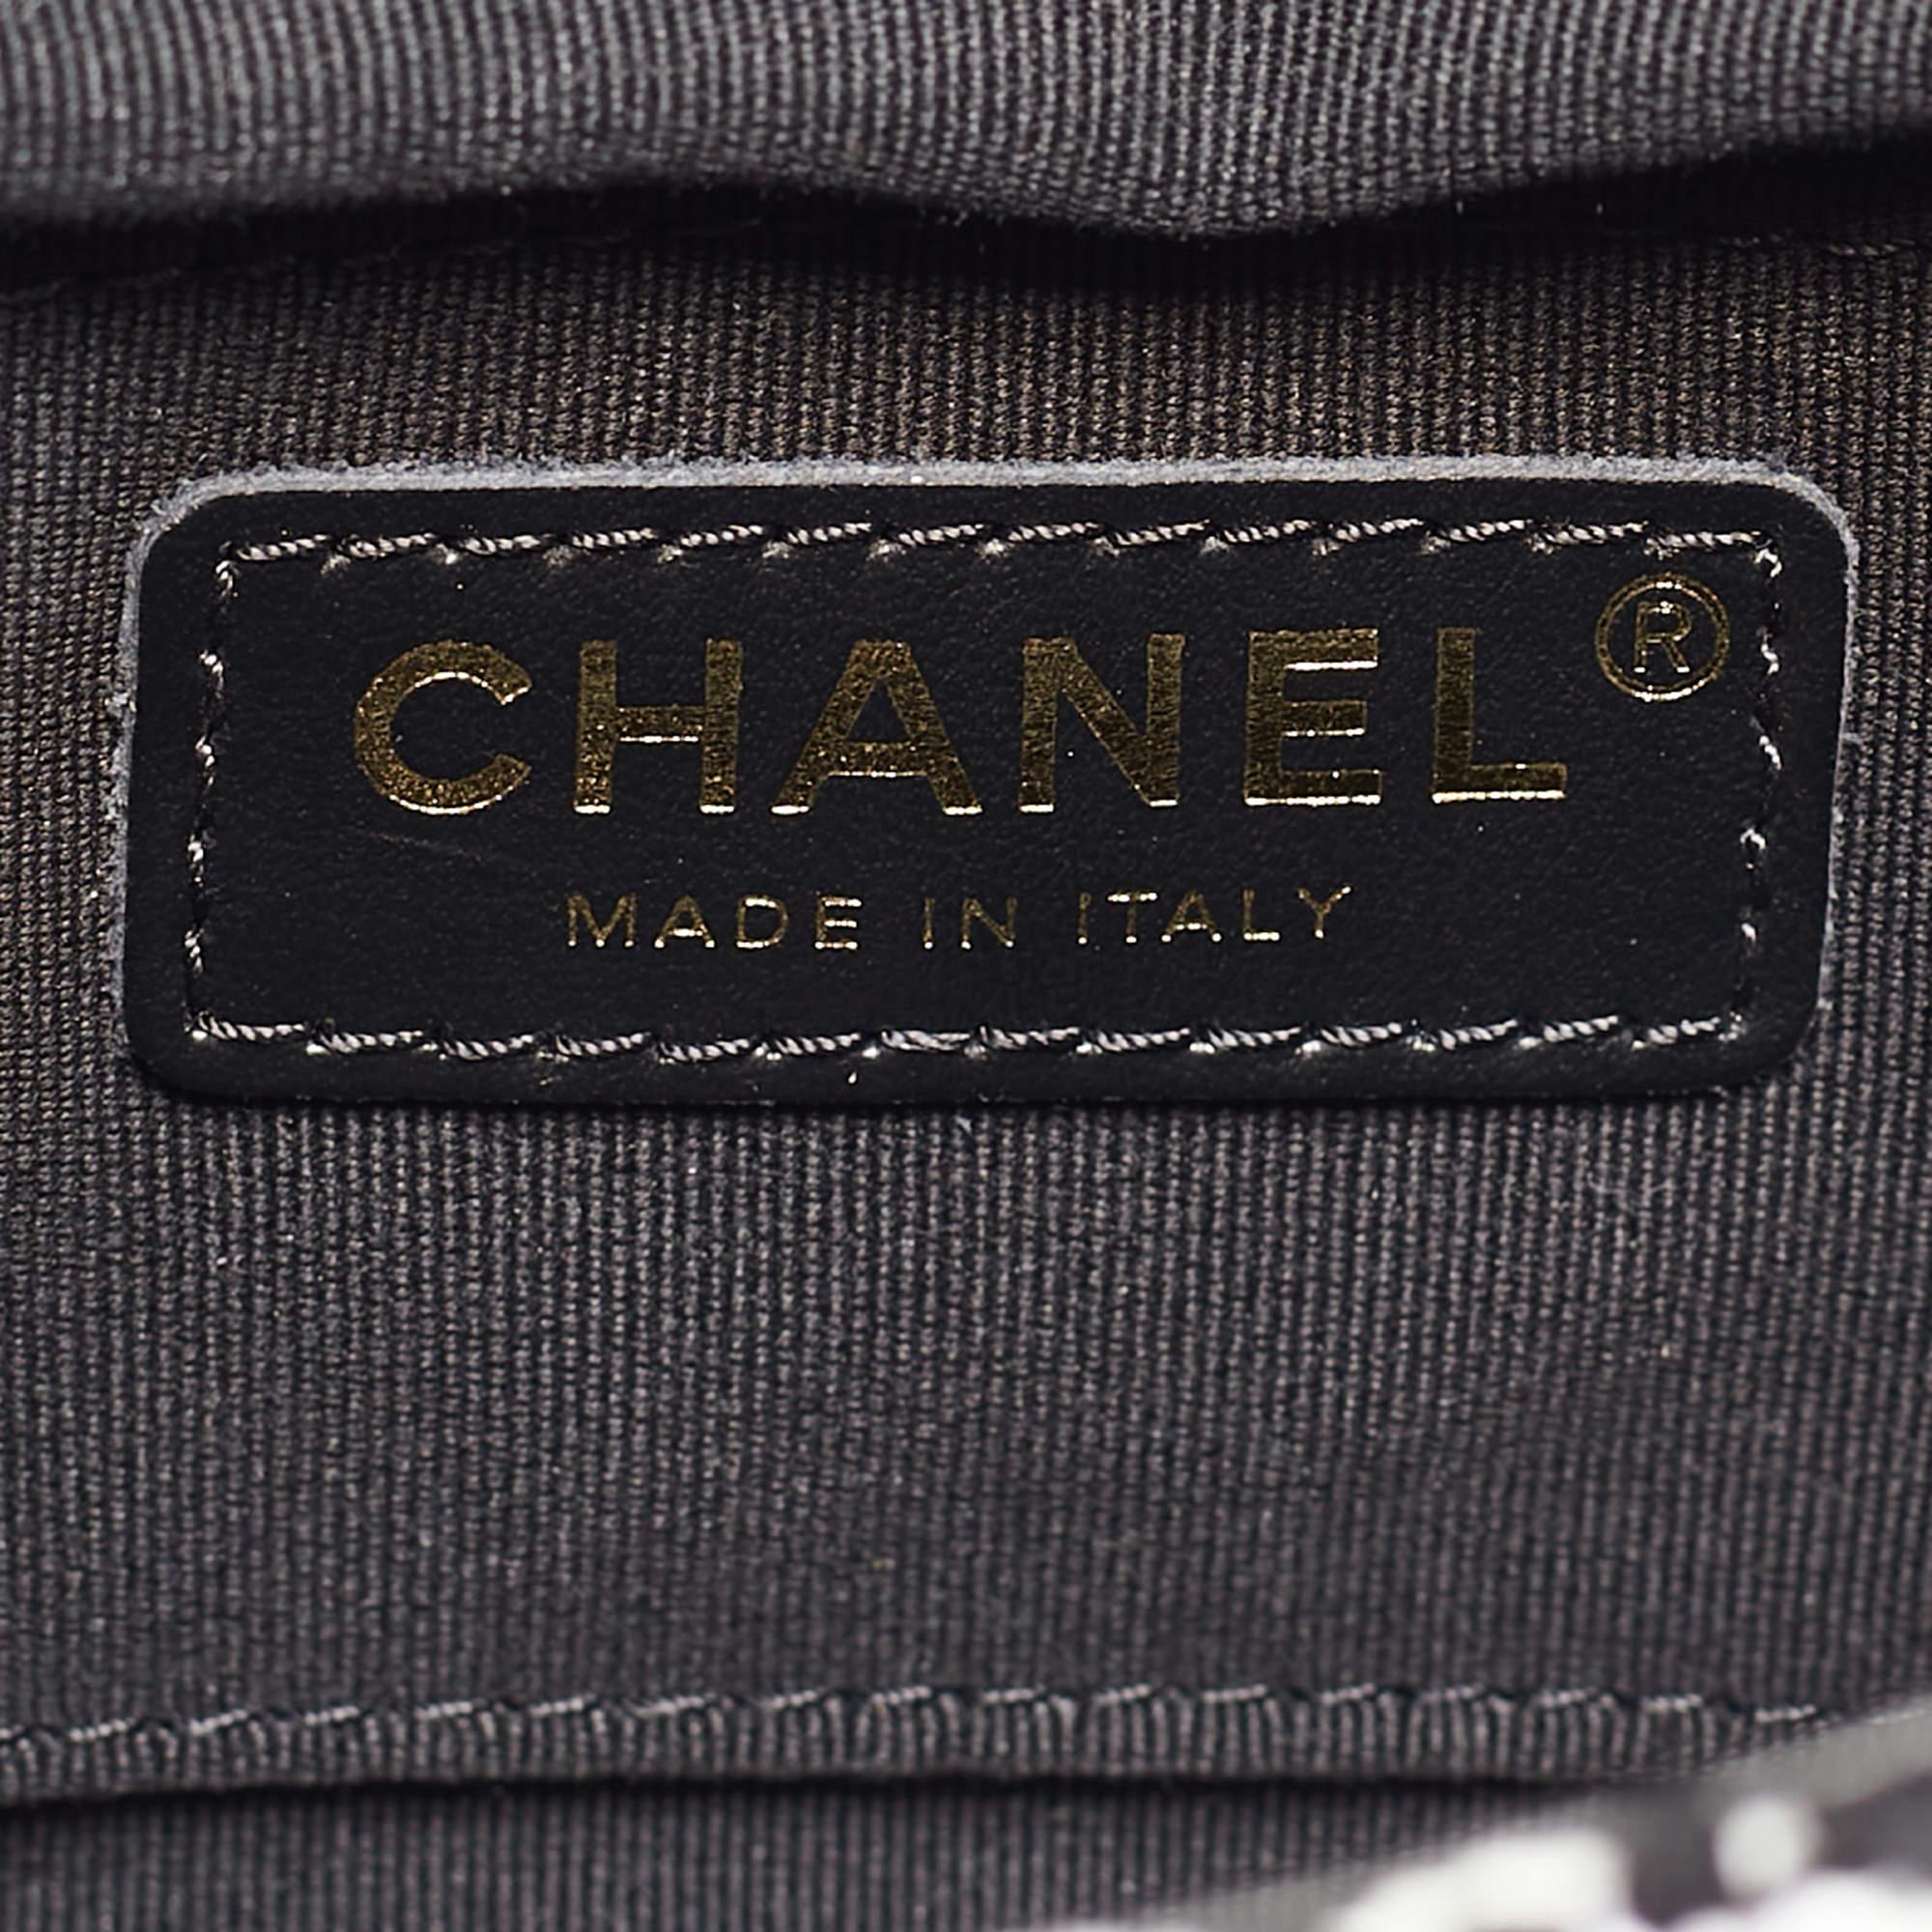 Chanel - Mini sac à rabat My Own Frame en cuir et tweed noir et blanc 1